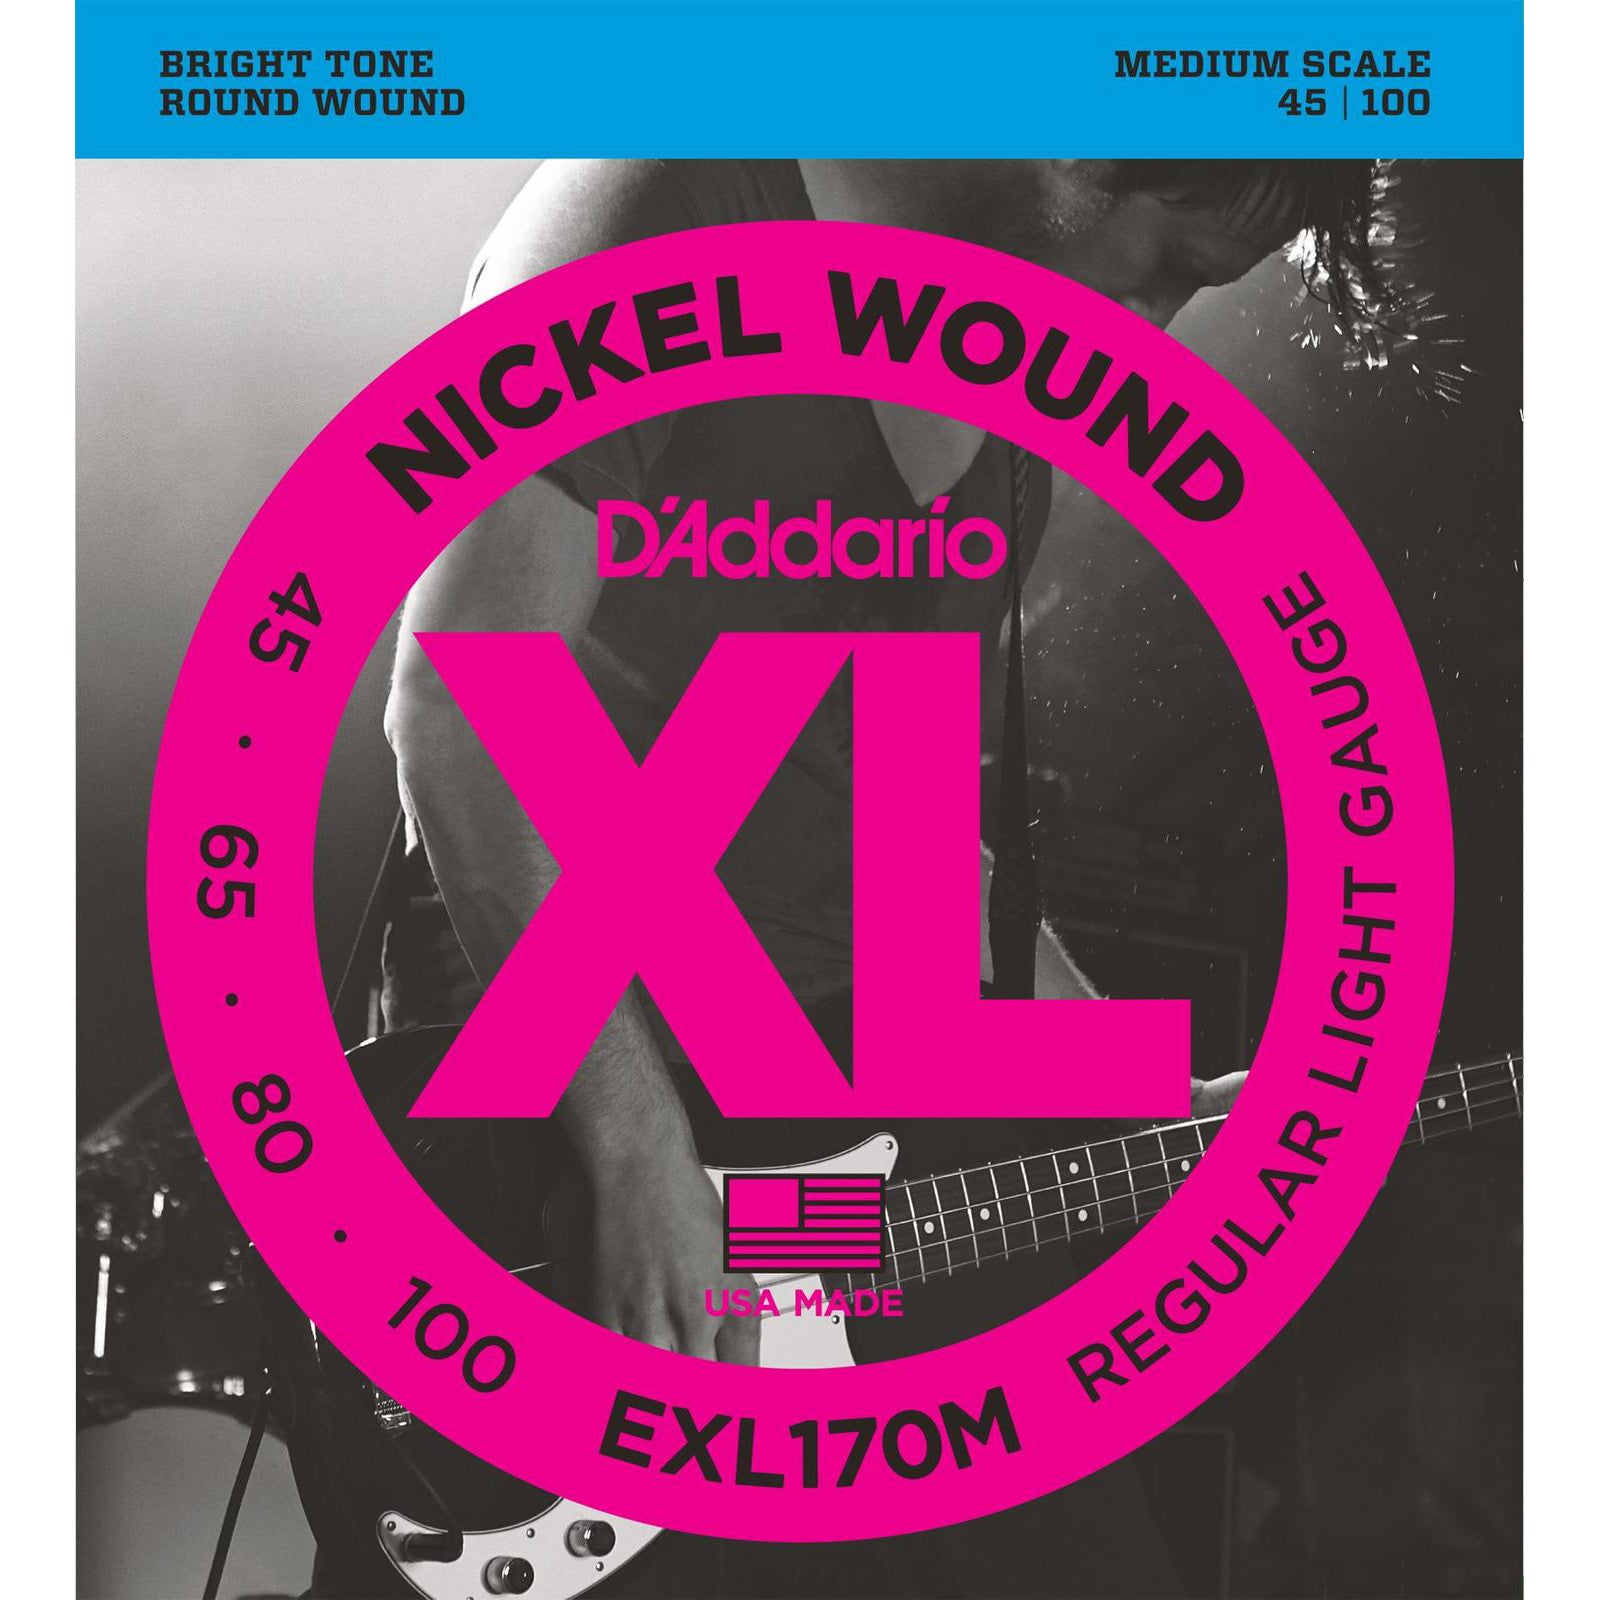 D'Addario EXL170M Medium Scale Bass Strings